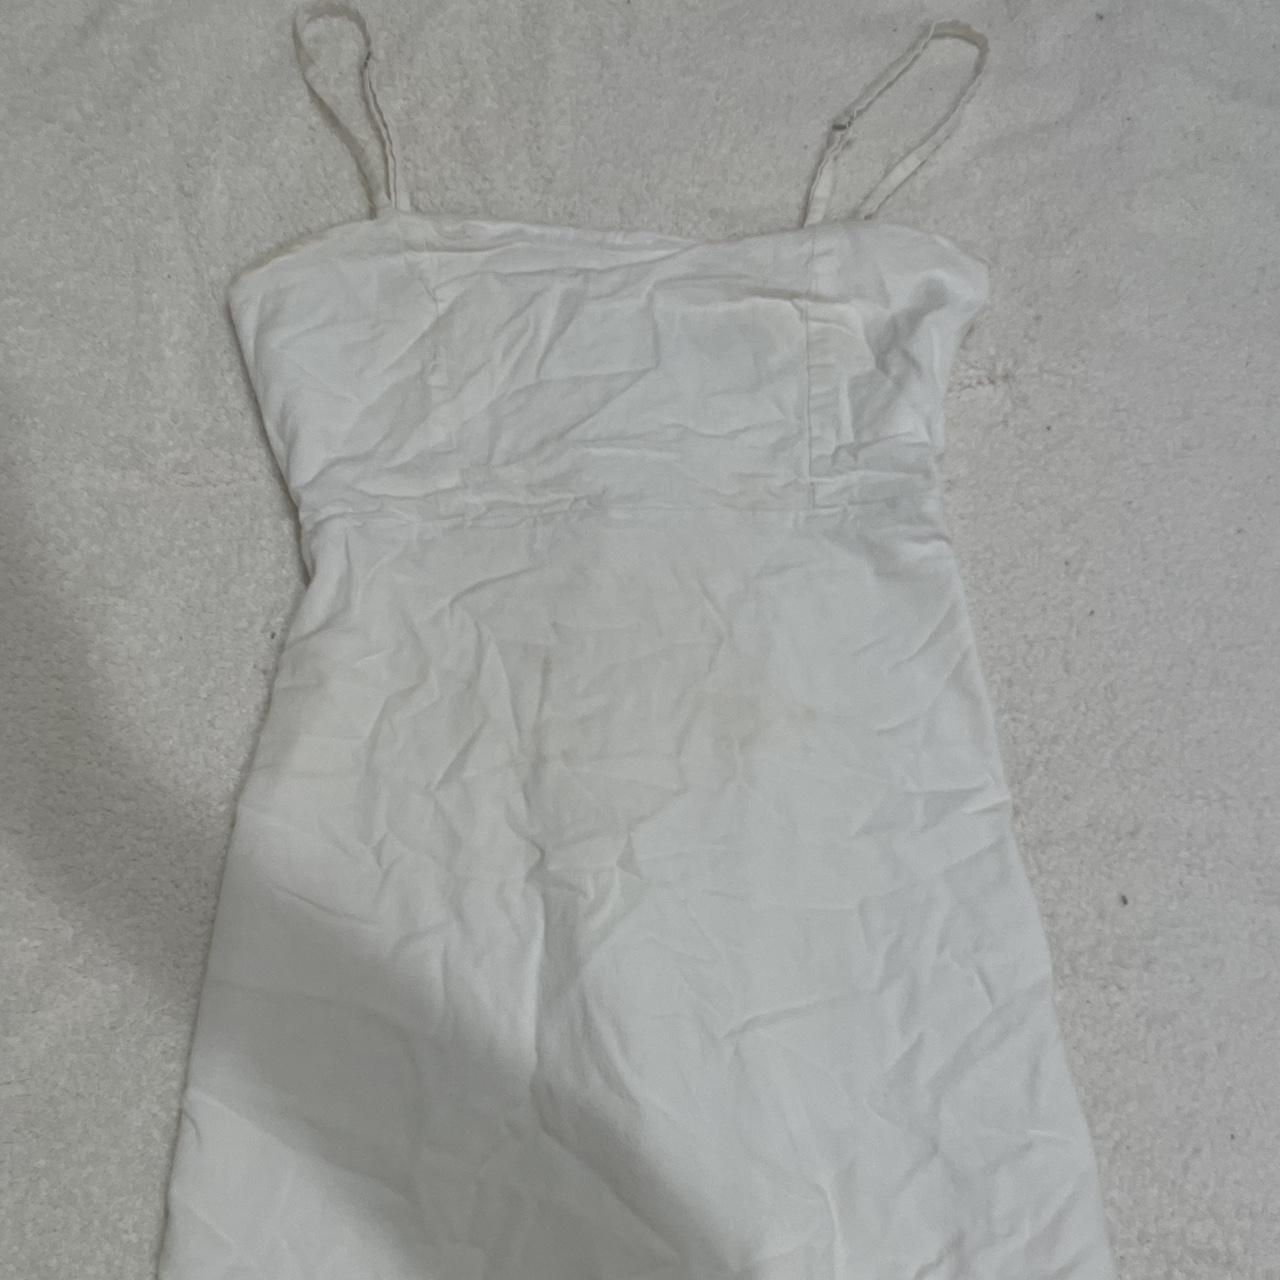 Brandy Melville Women's White Dress | Depop